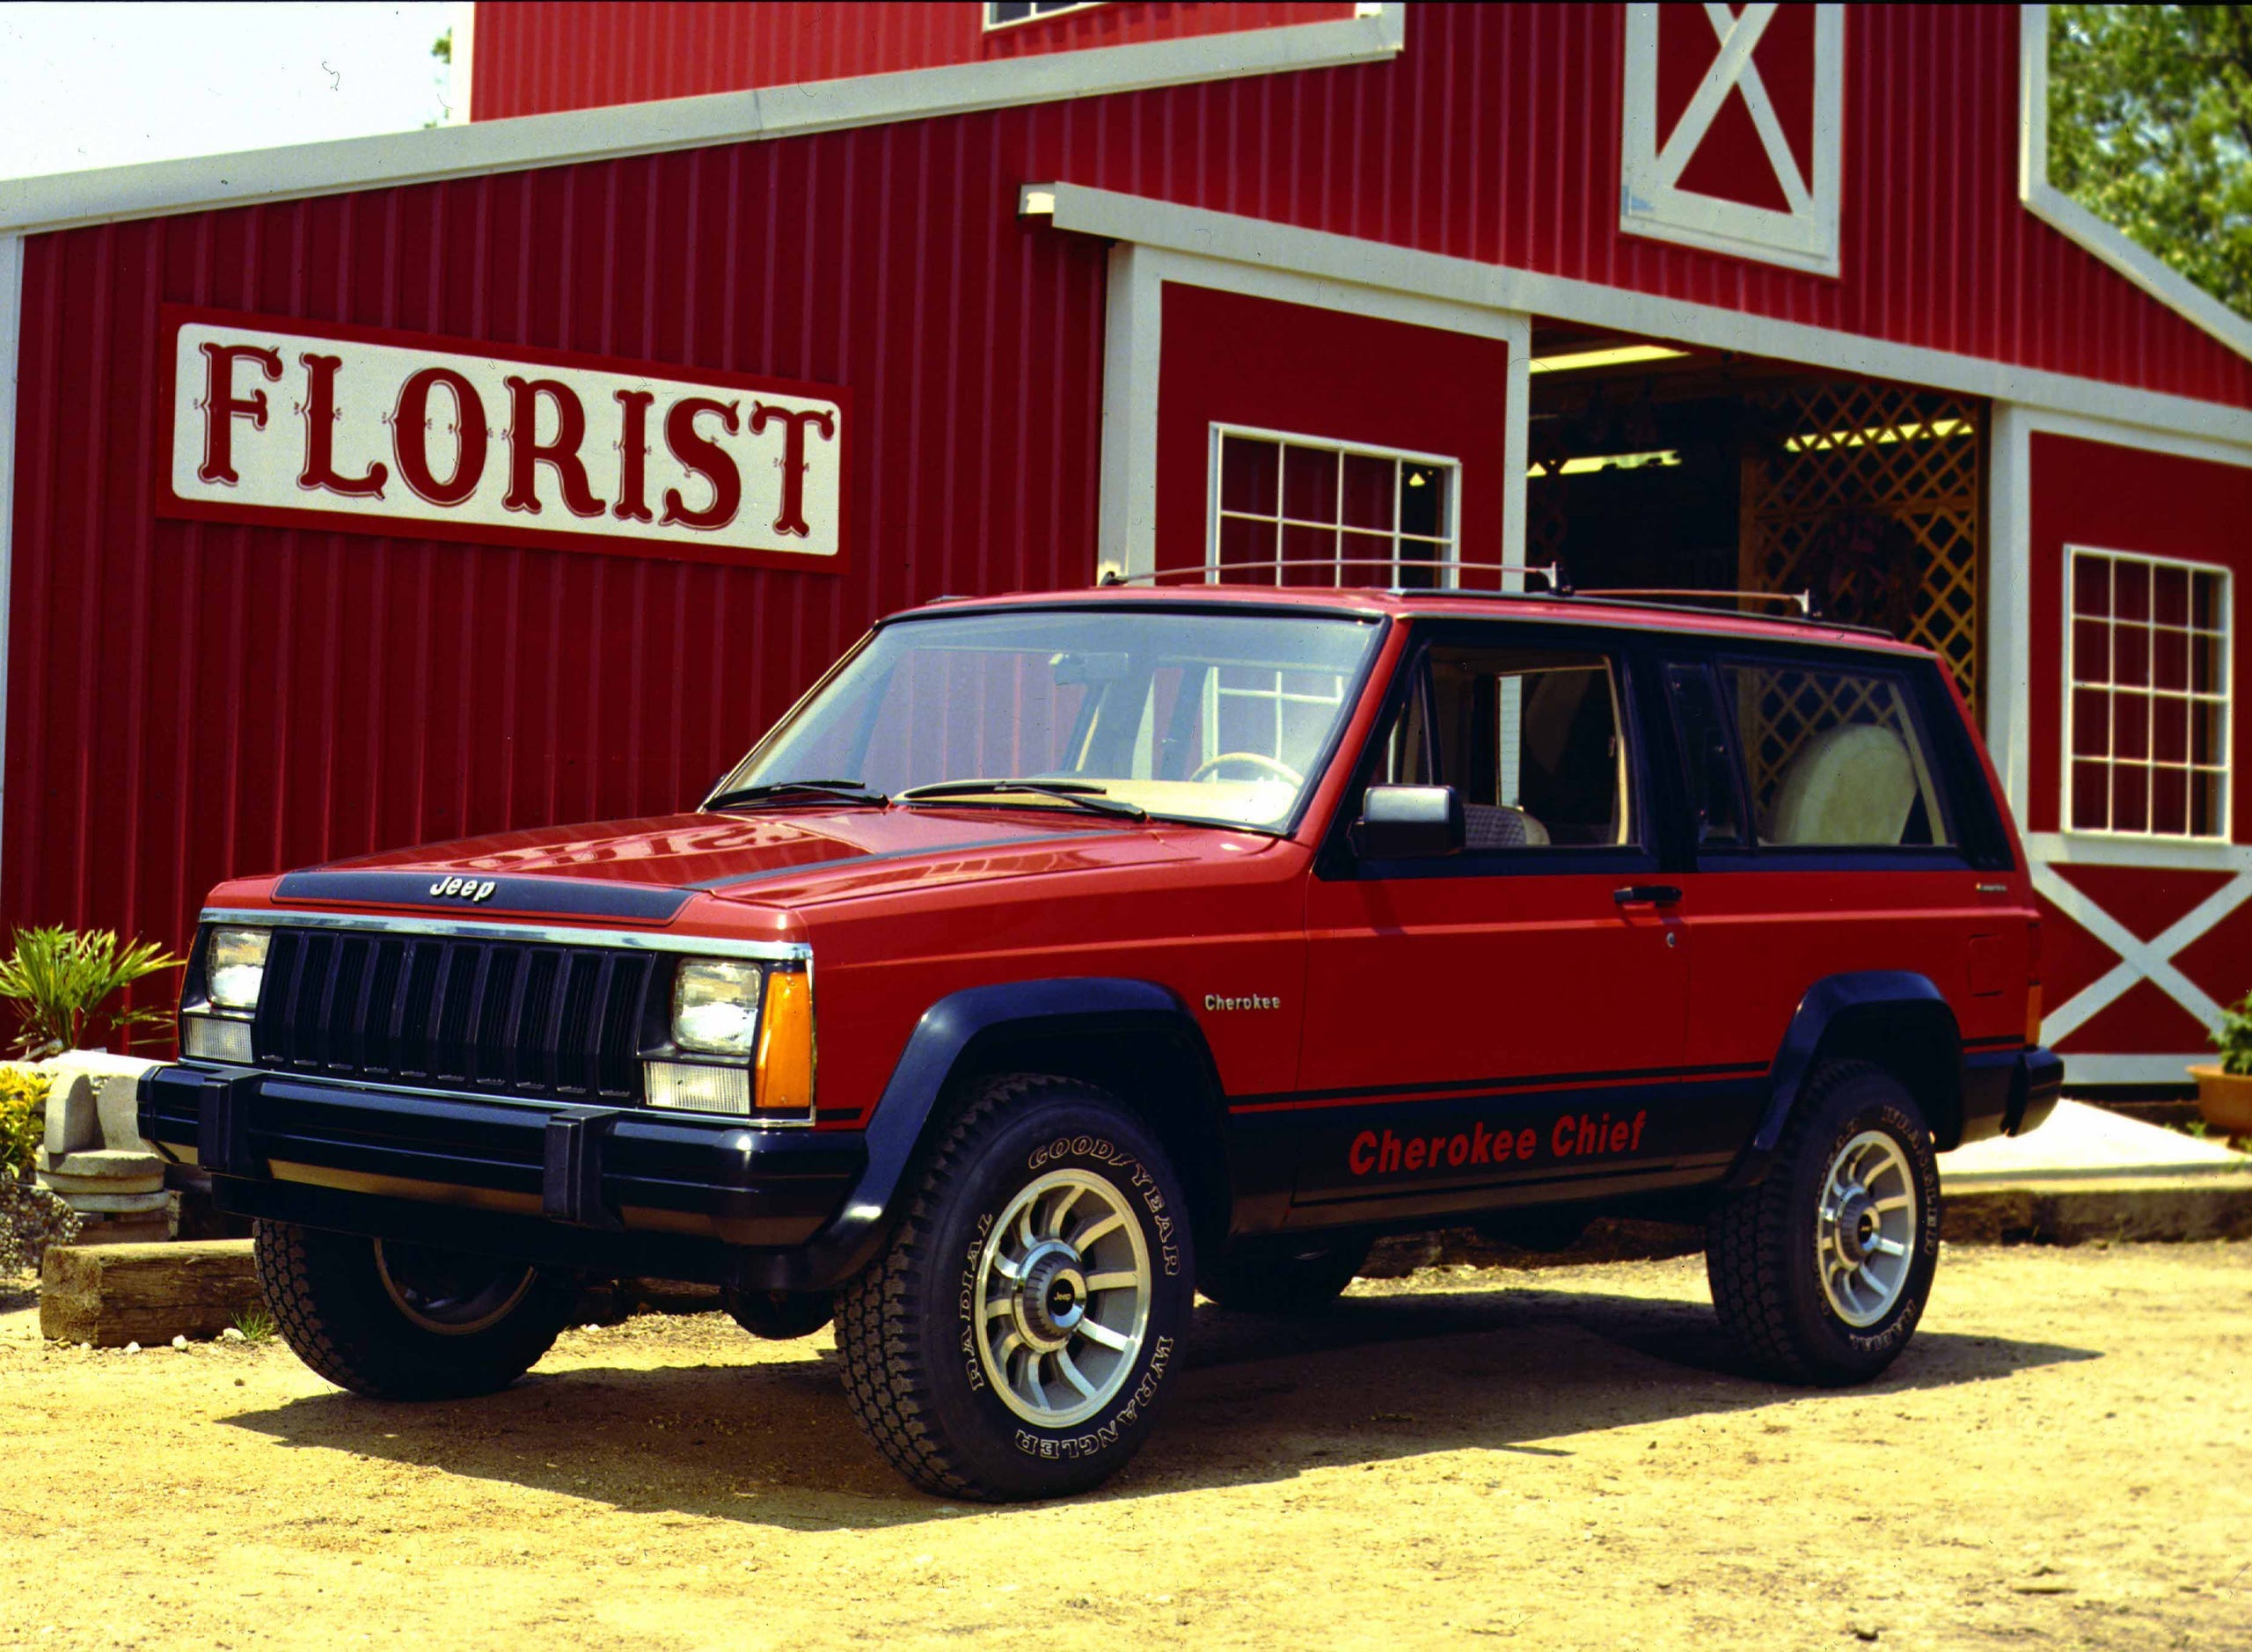 A 1984 Jeep Cherokee Chief.